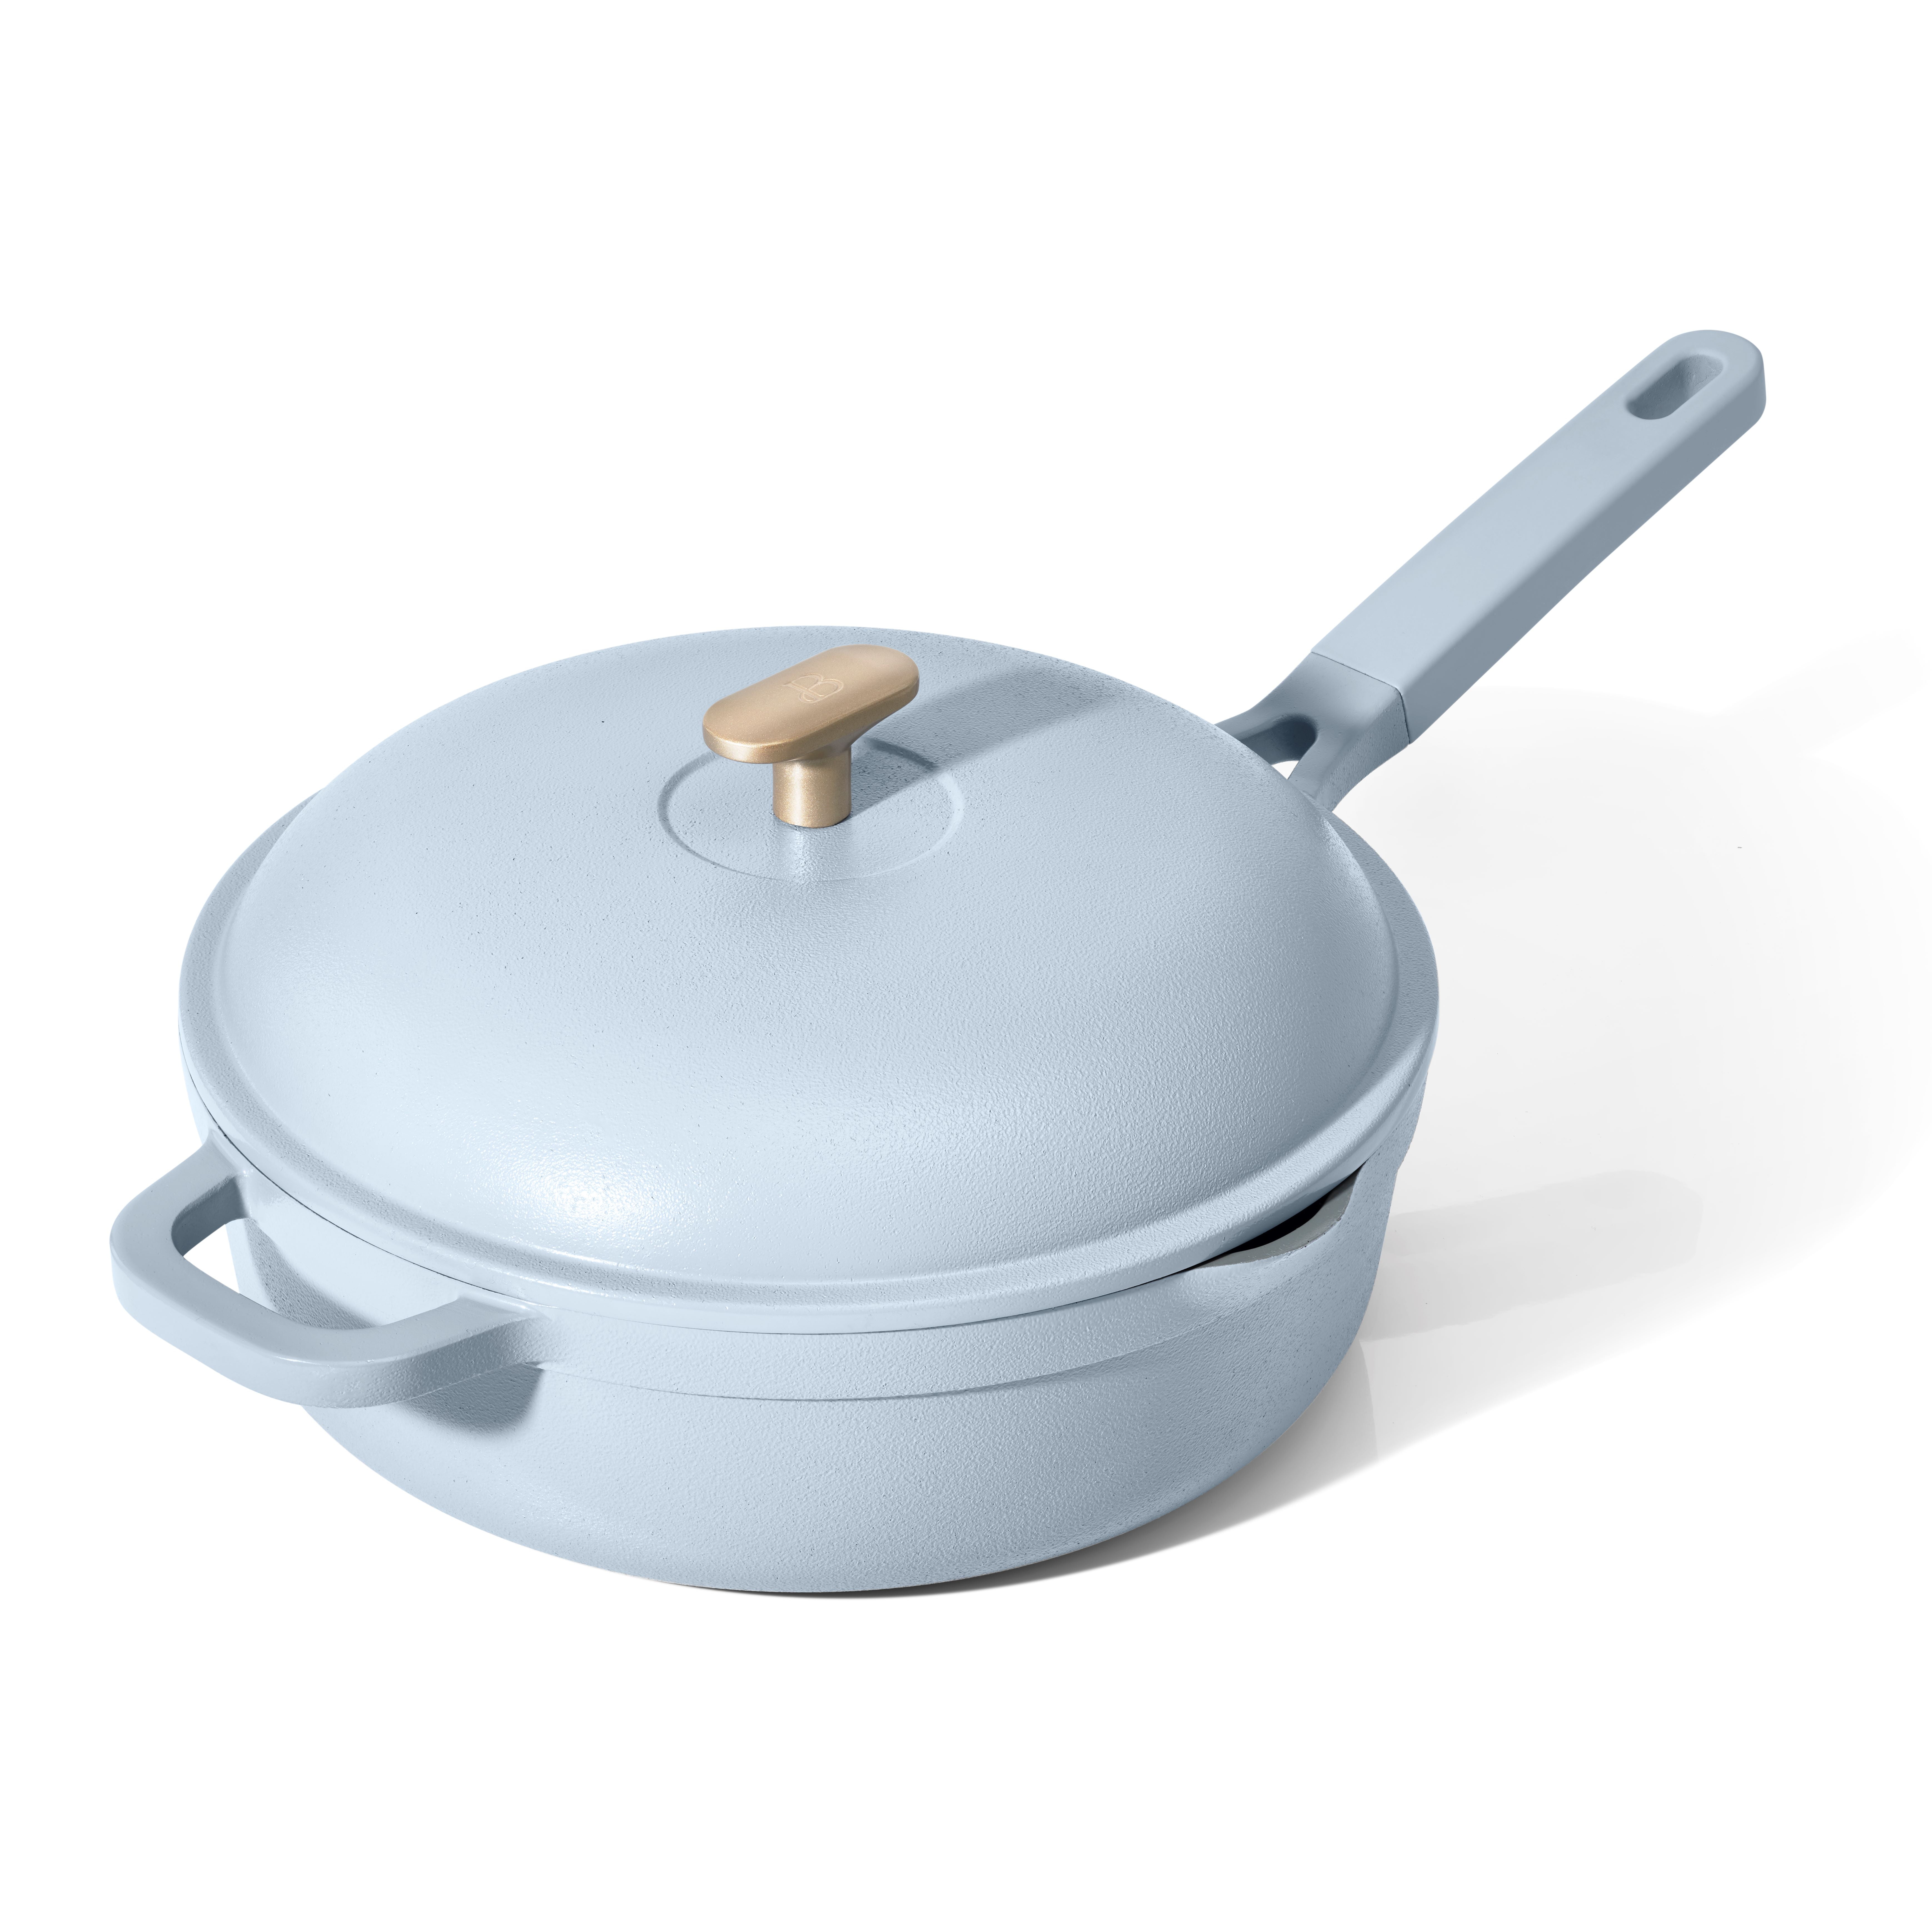 Beautiful 4QT Hero Pan with Steam Insert, Cornflower Blue by Drew Barrymore - Walmart.com